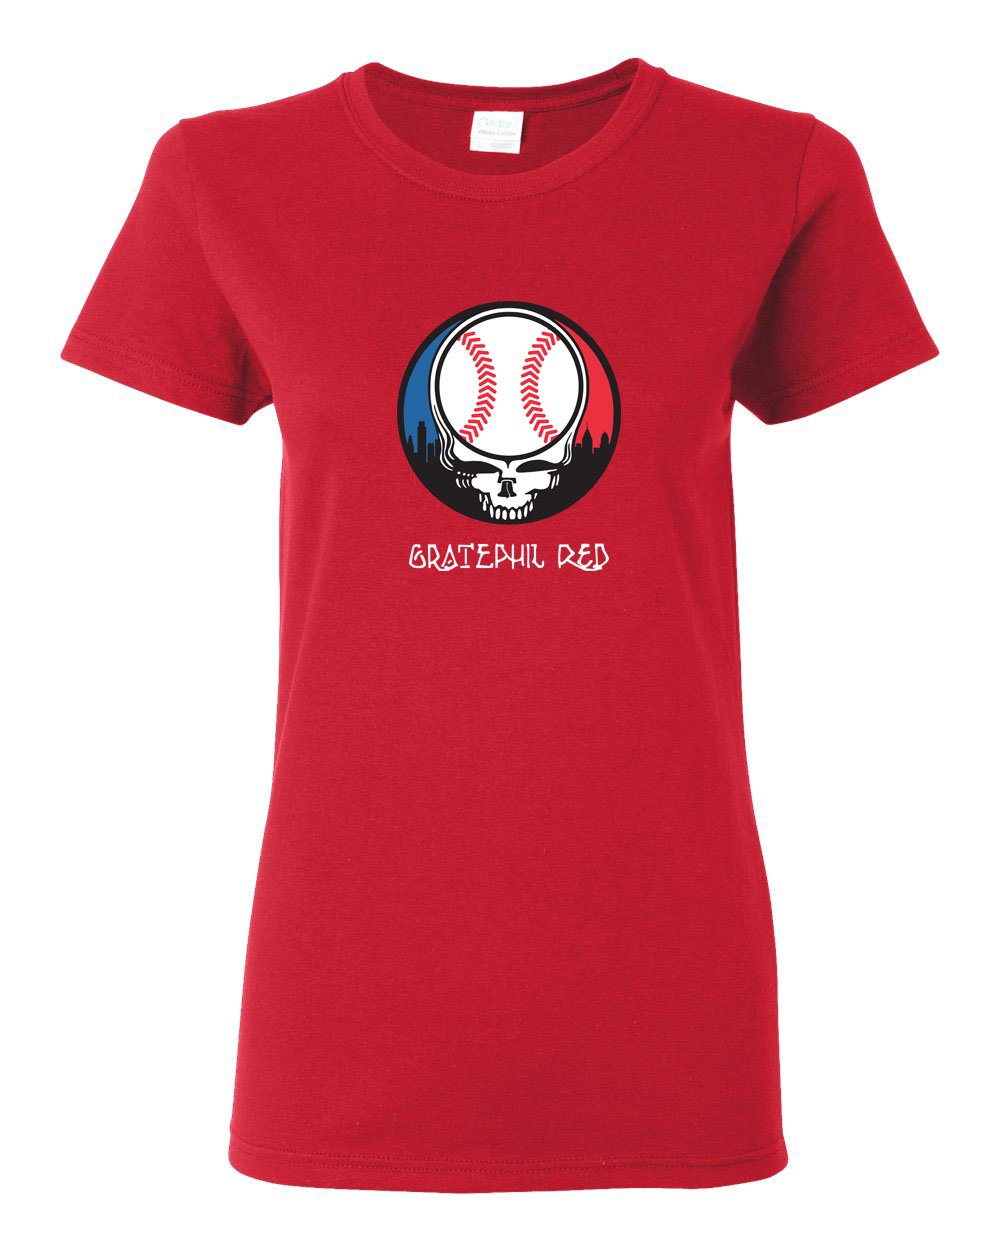 Gratephil Red LADIES Missy-Fit T-Shirt